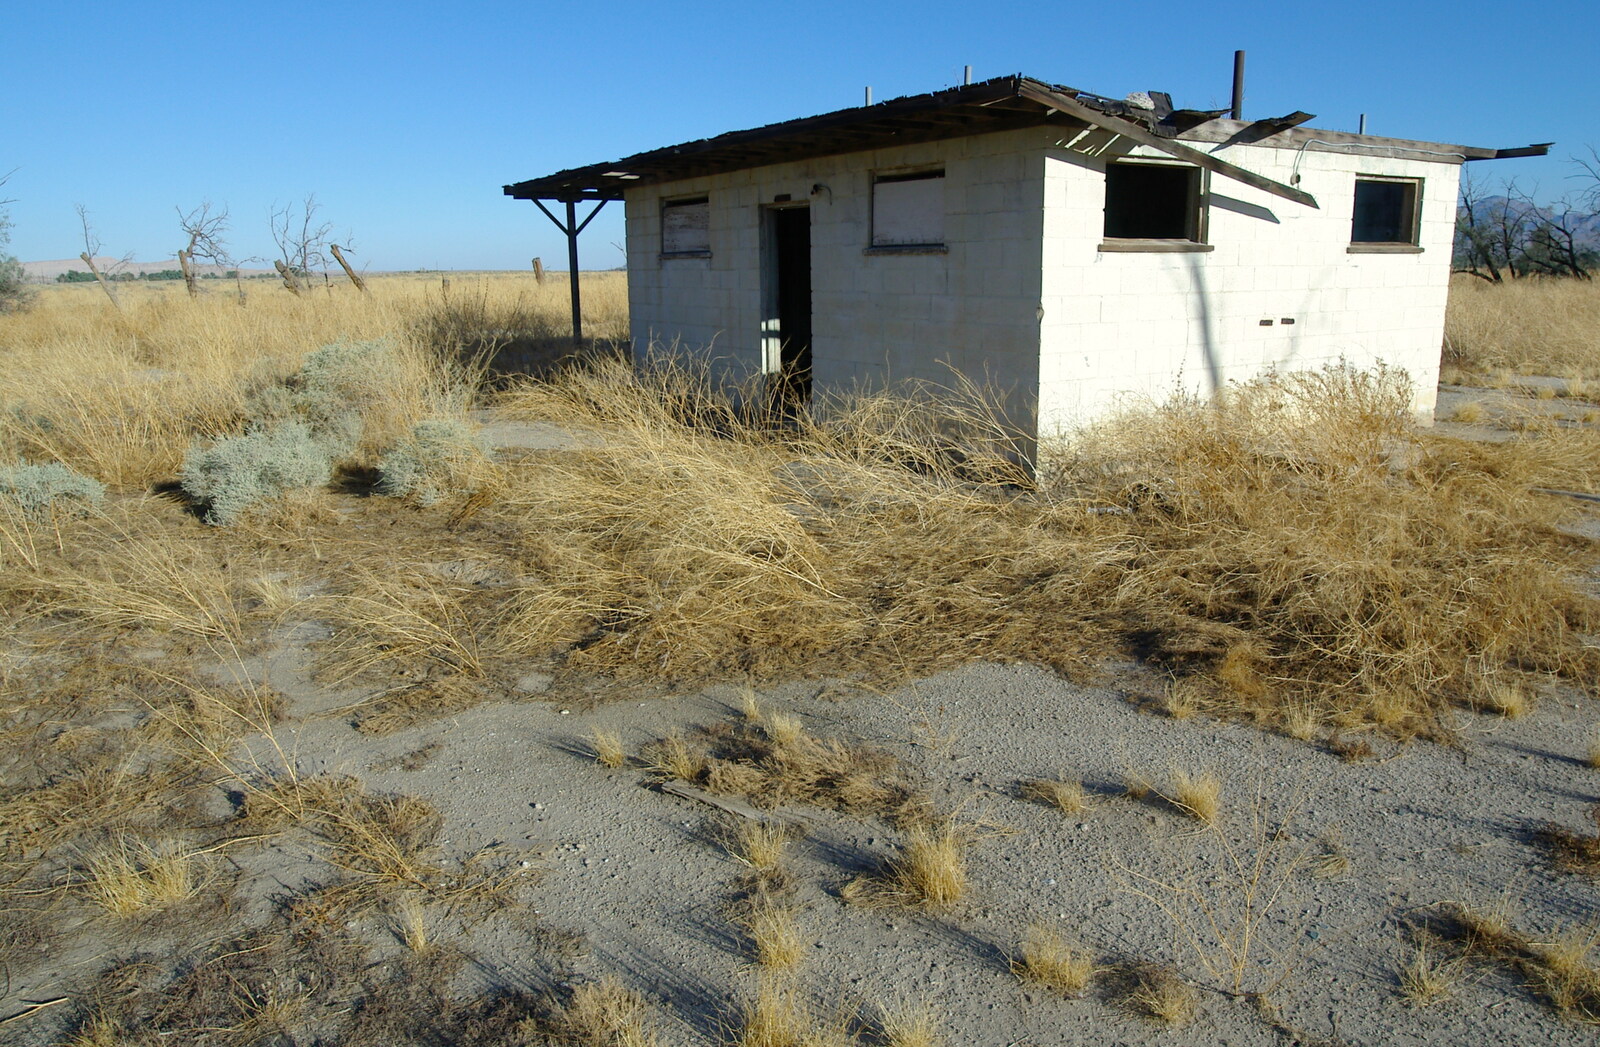 Another nearby derelict building from California Desert 2: The Salton Sea and Anza-Borrego to Julian, California, US - 24th September 2005